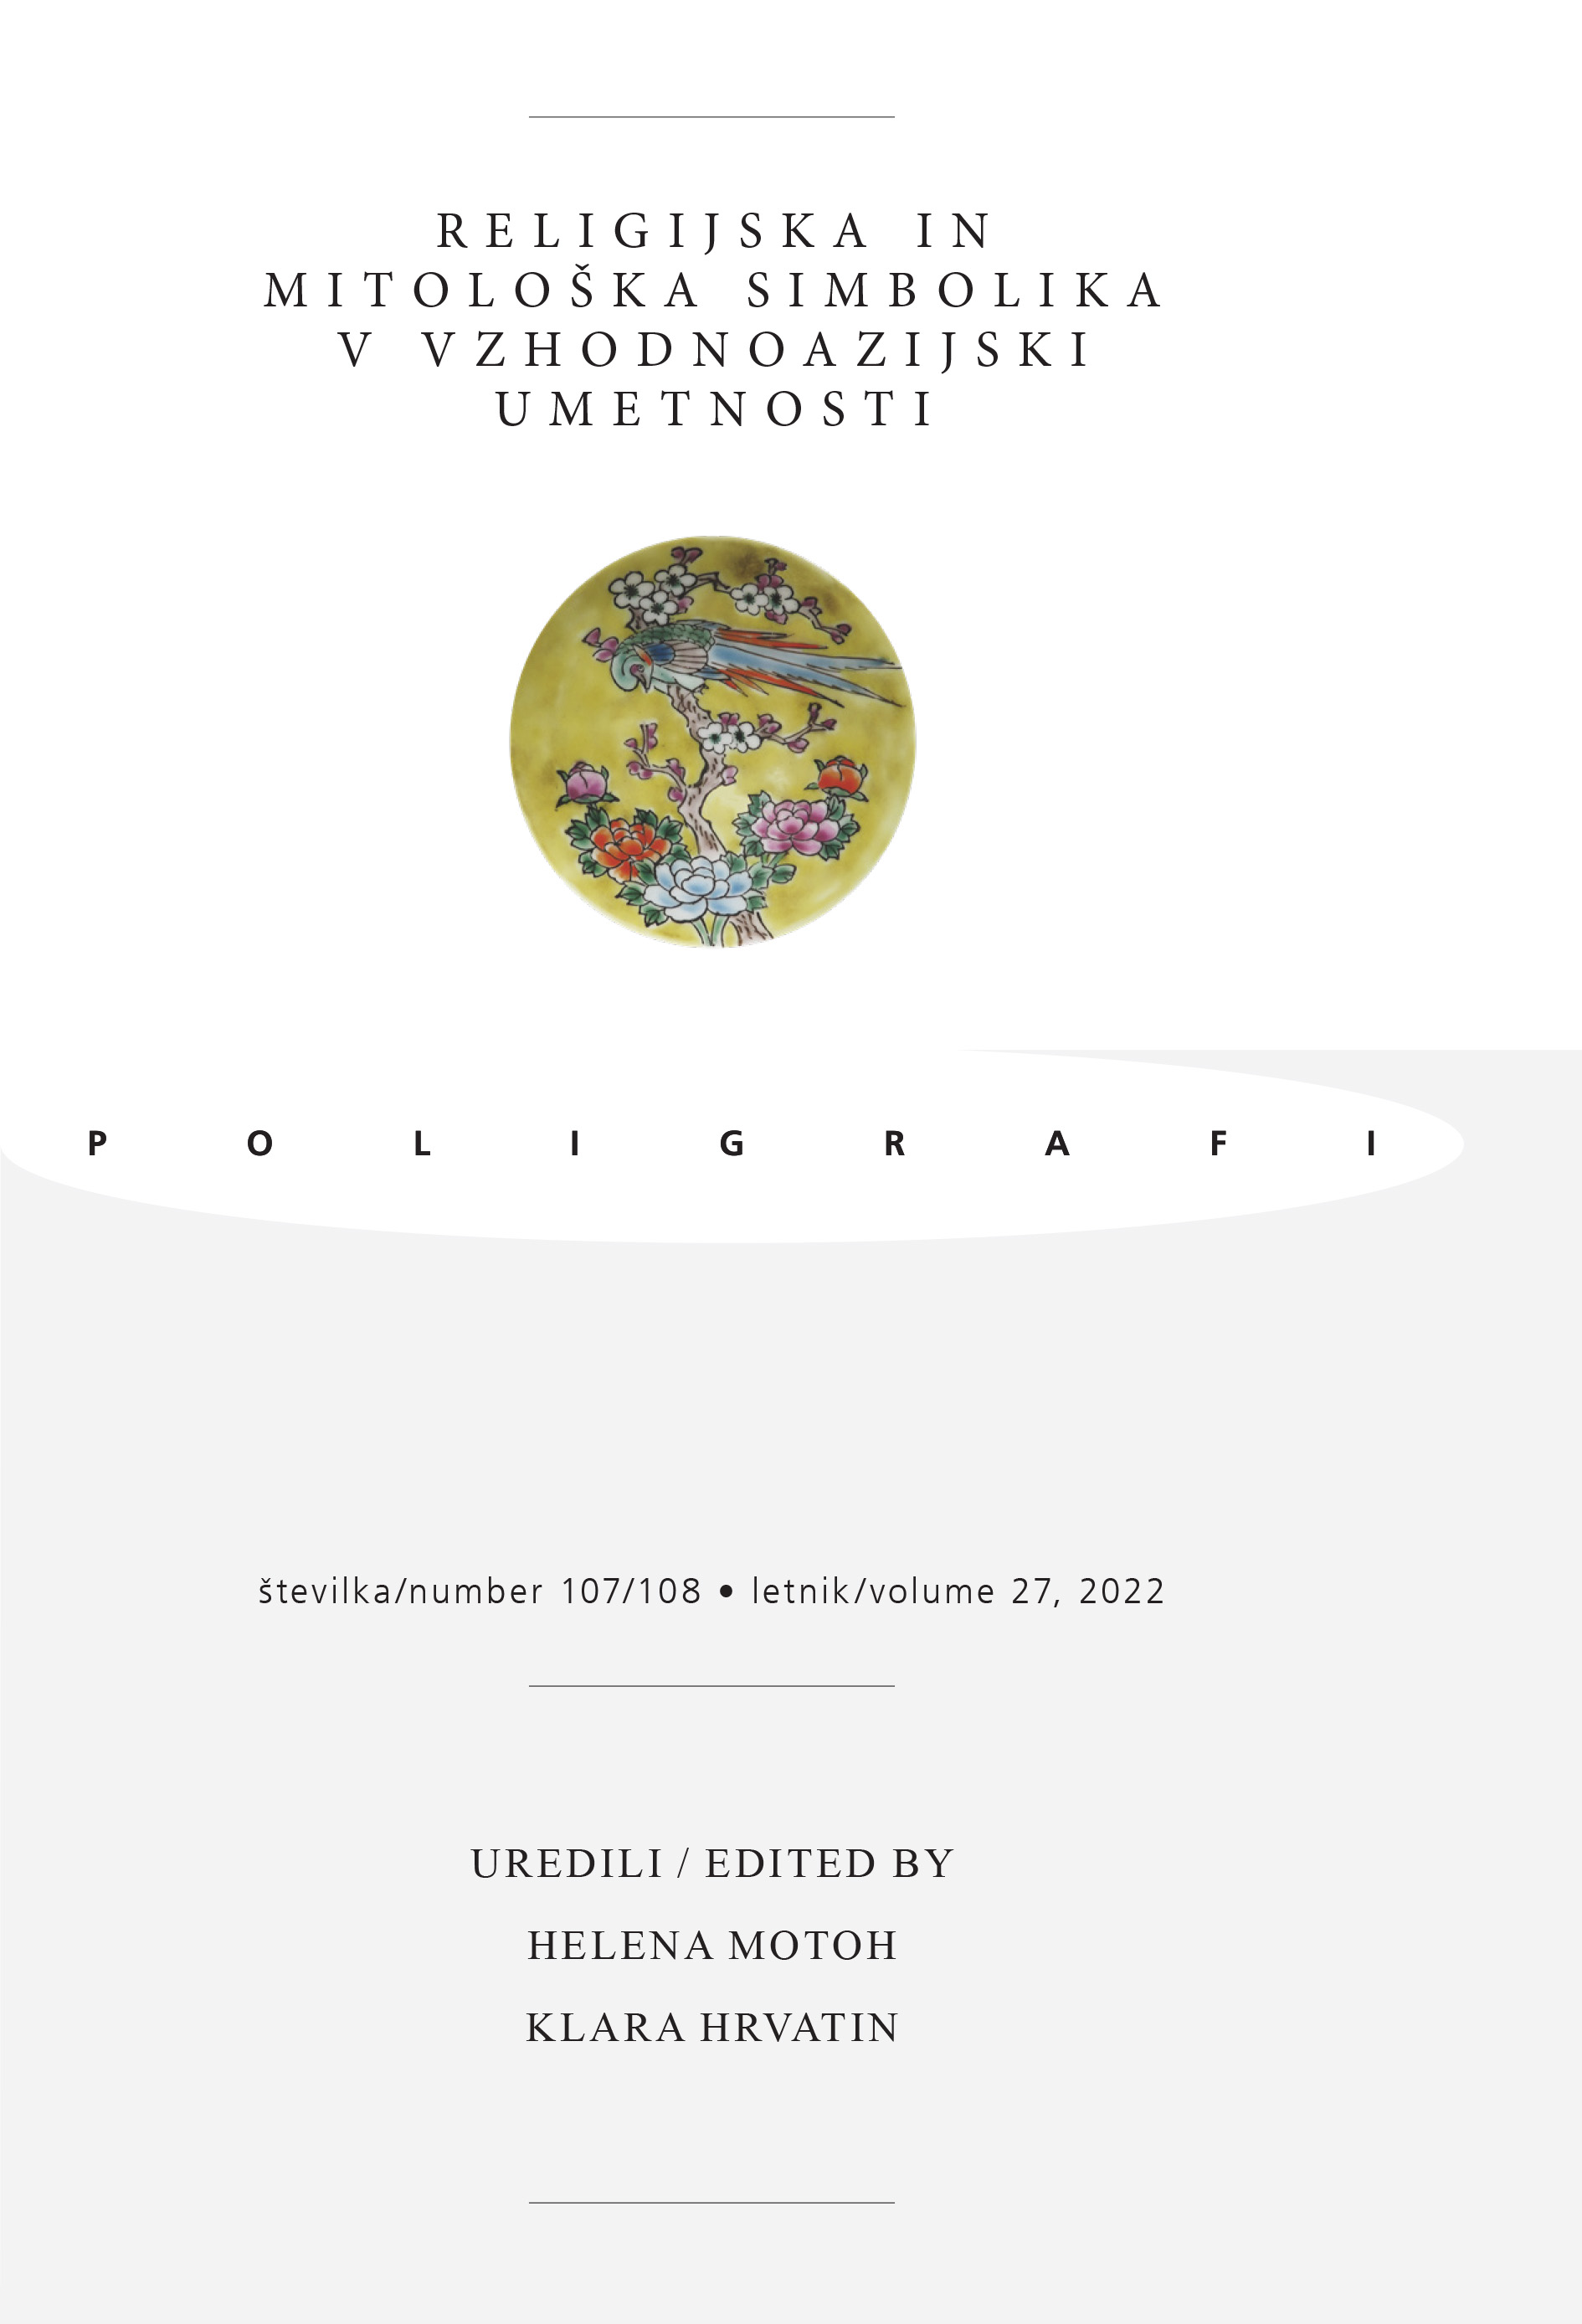 					View Vol. 27 No. 107/108 (2022): Religijska in mitološka simbolika v vzhodnoazijski umetnosti
				